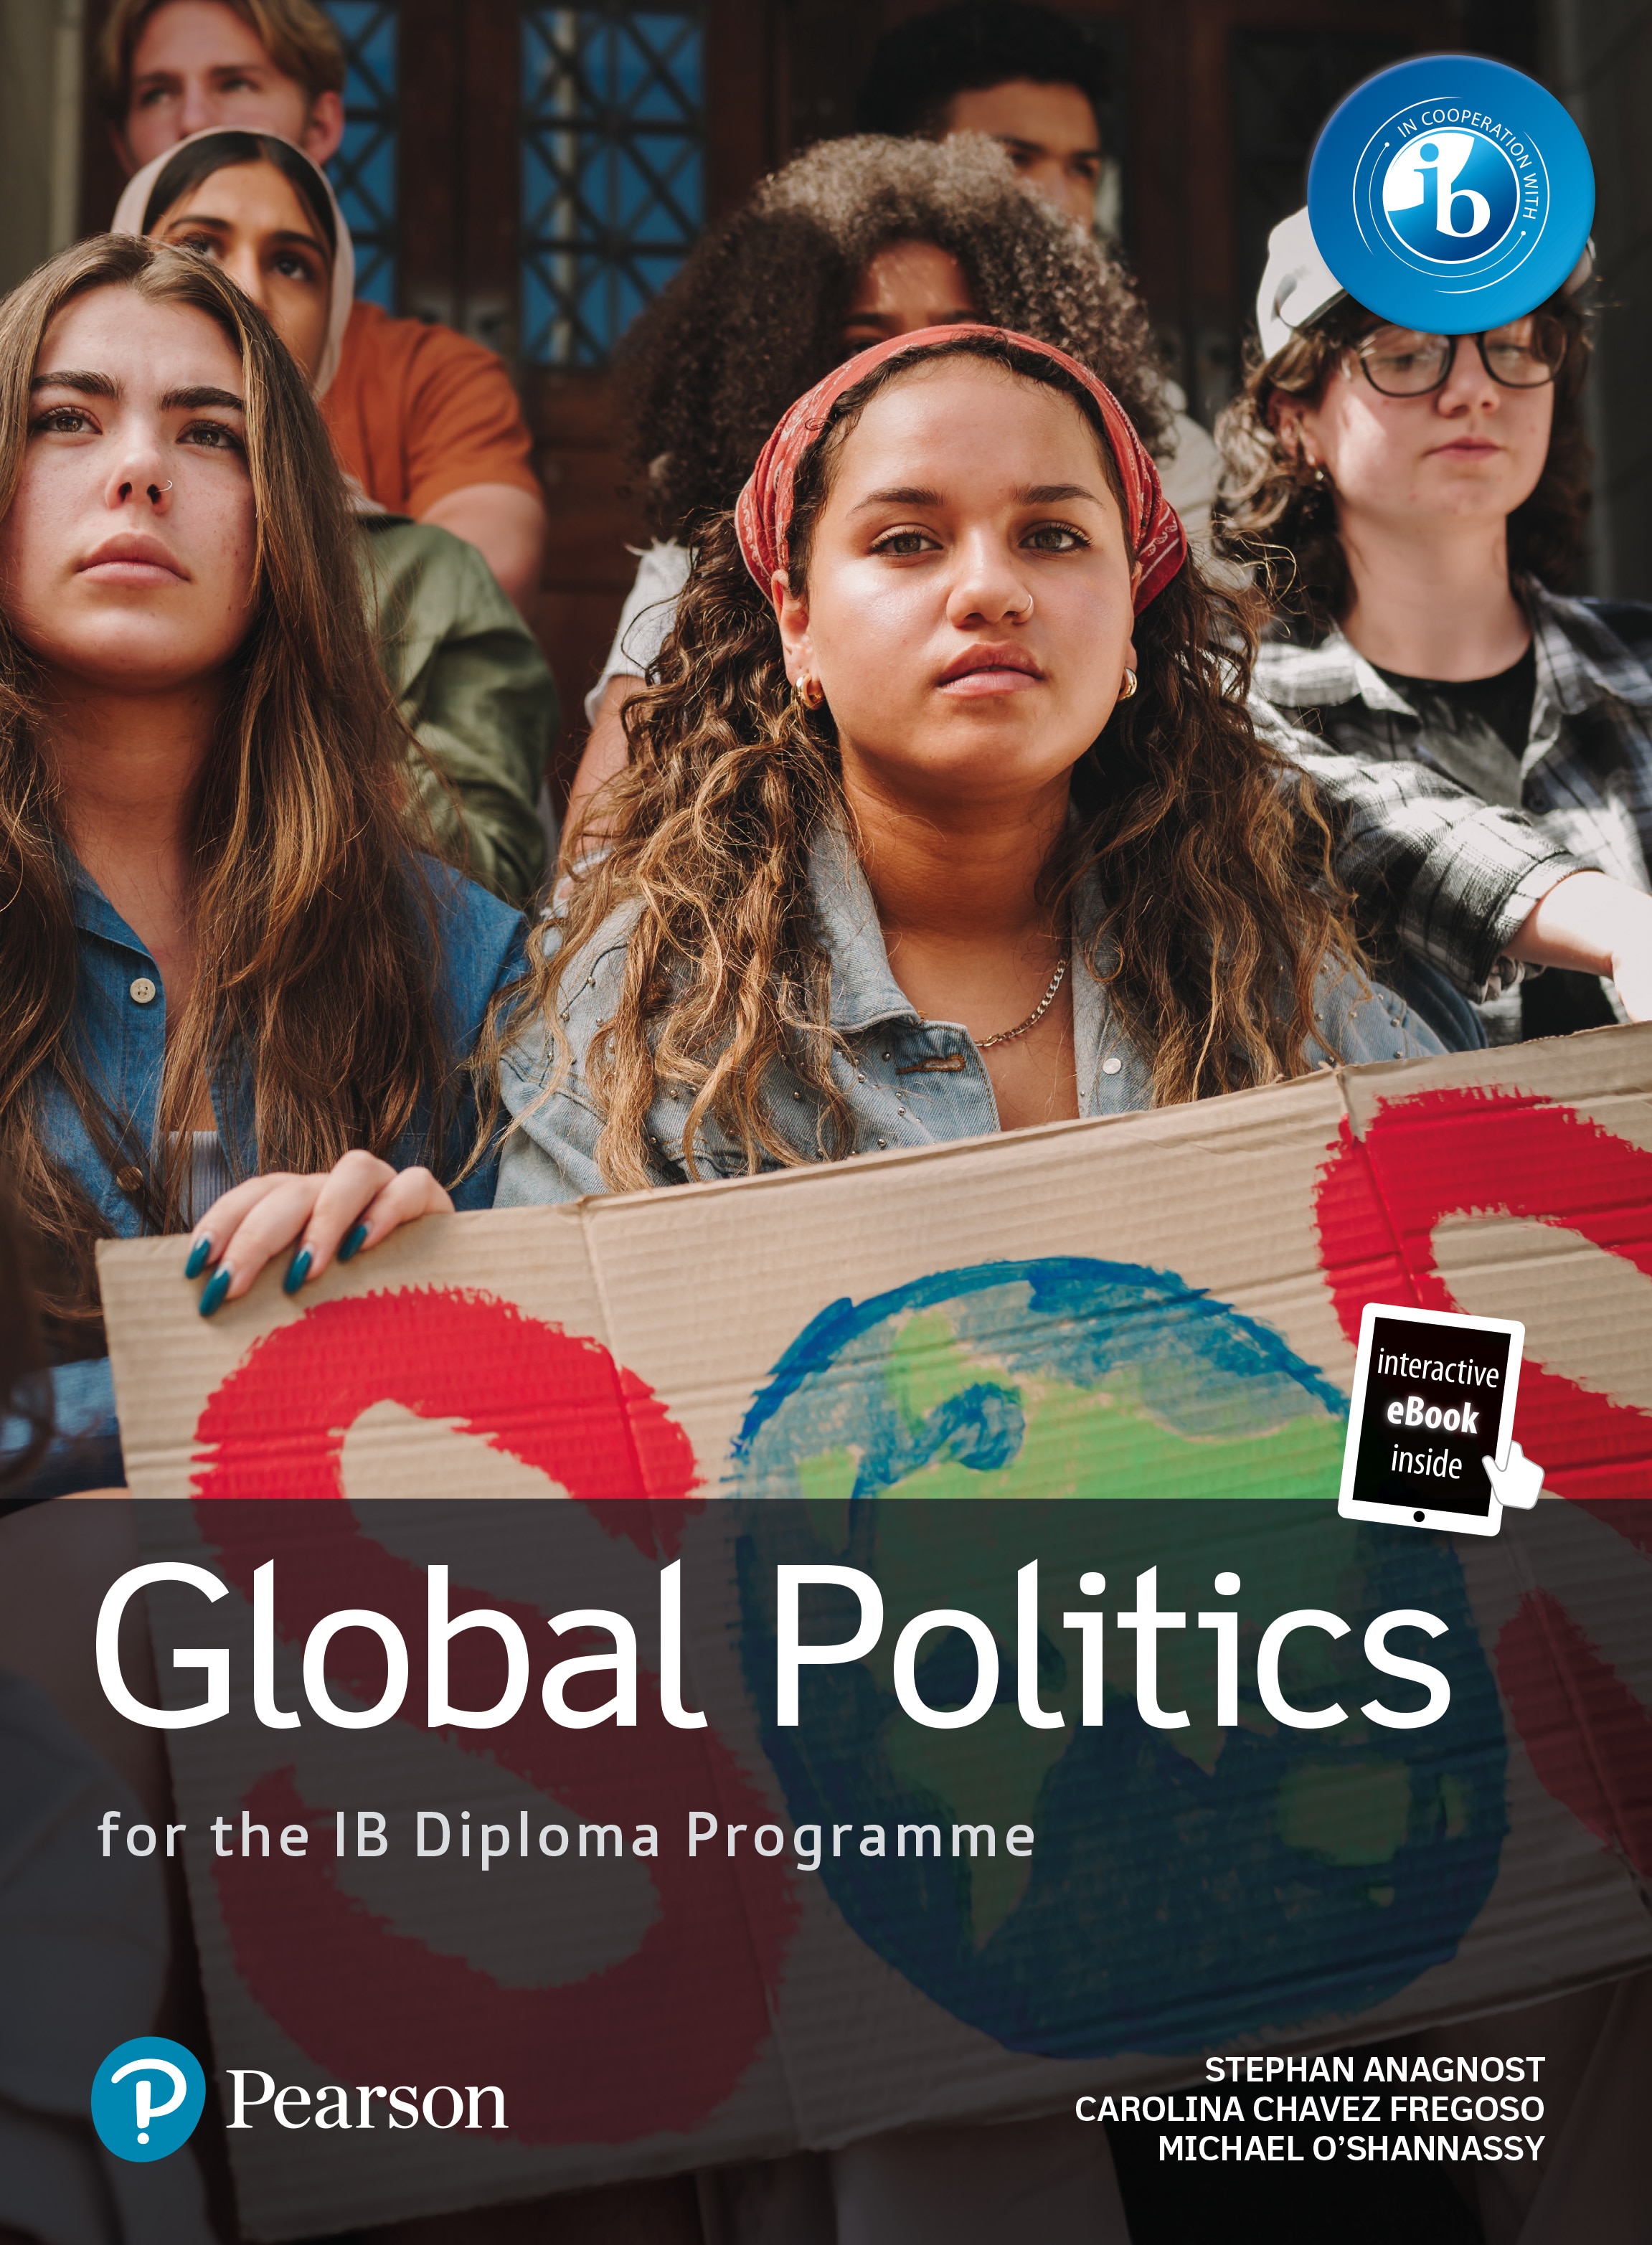 IB Diploma Group 3 Global Politics cover